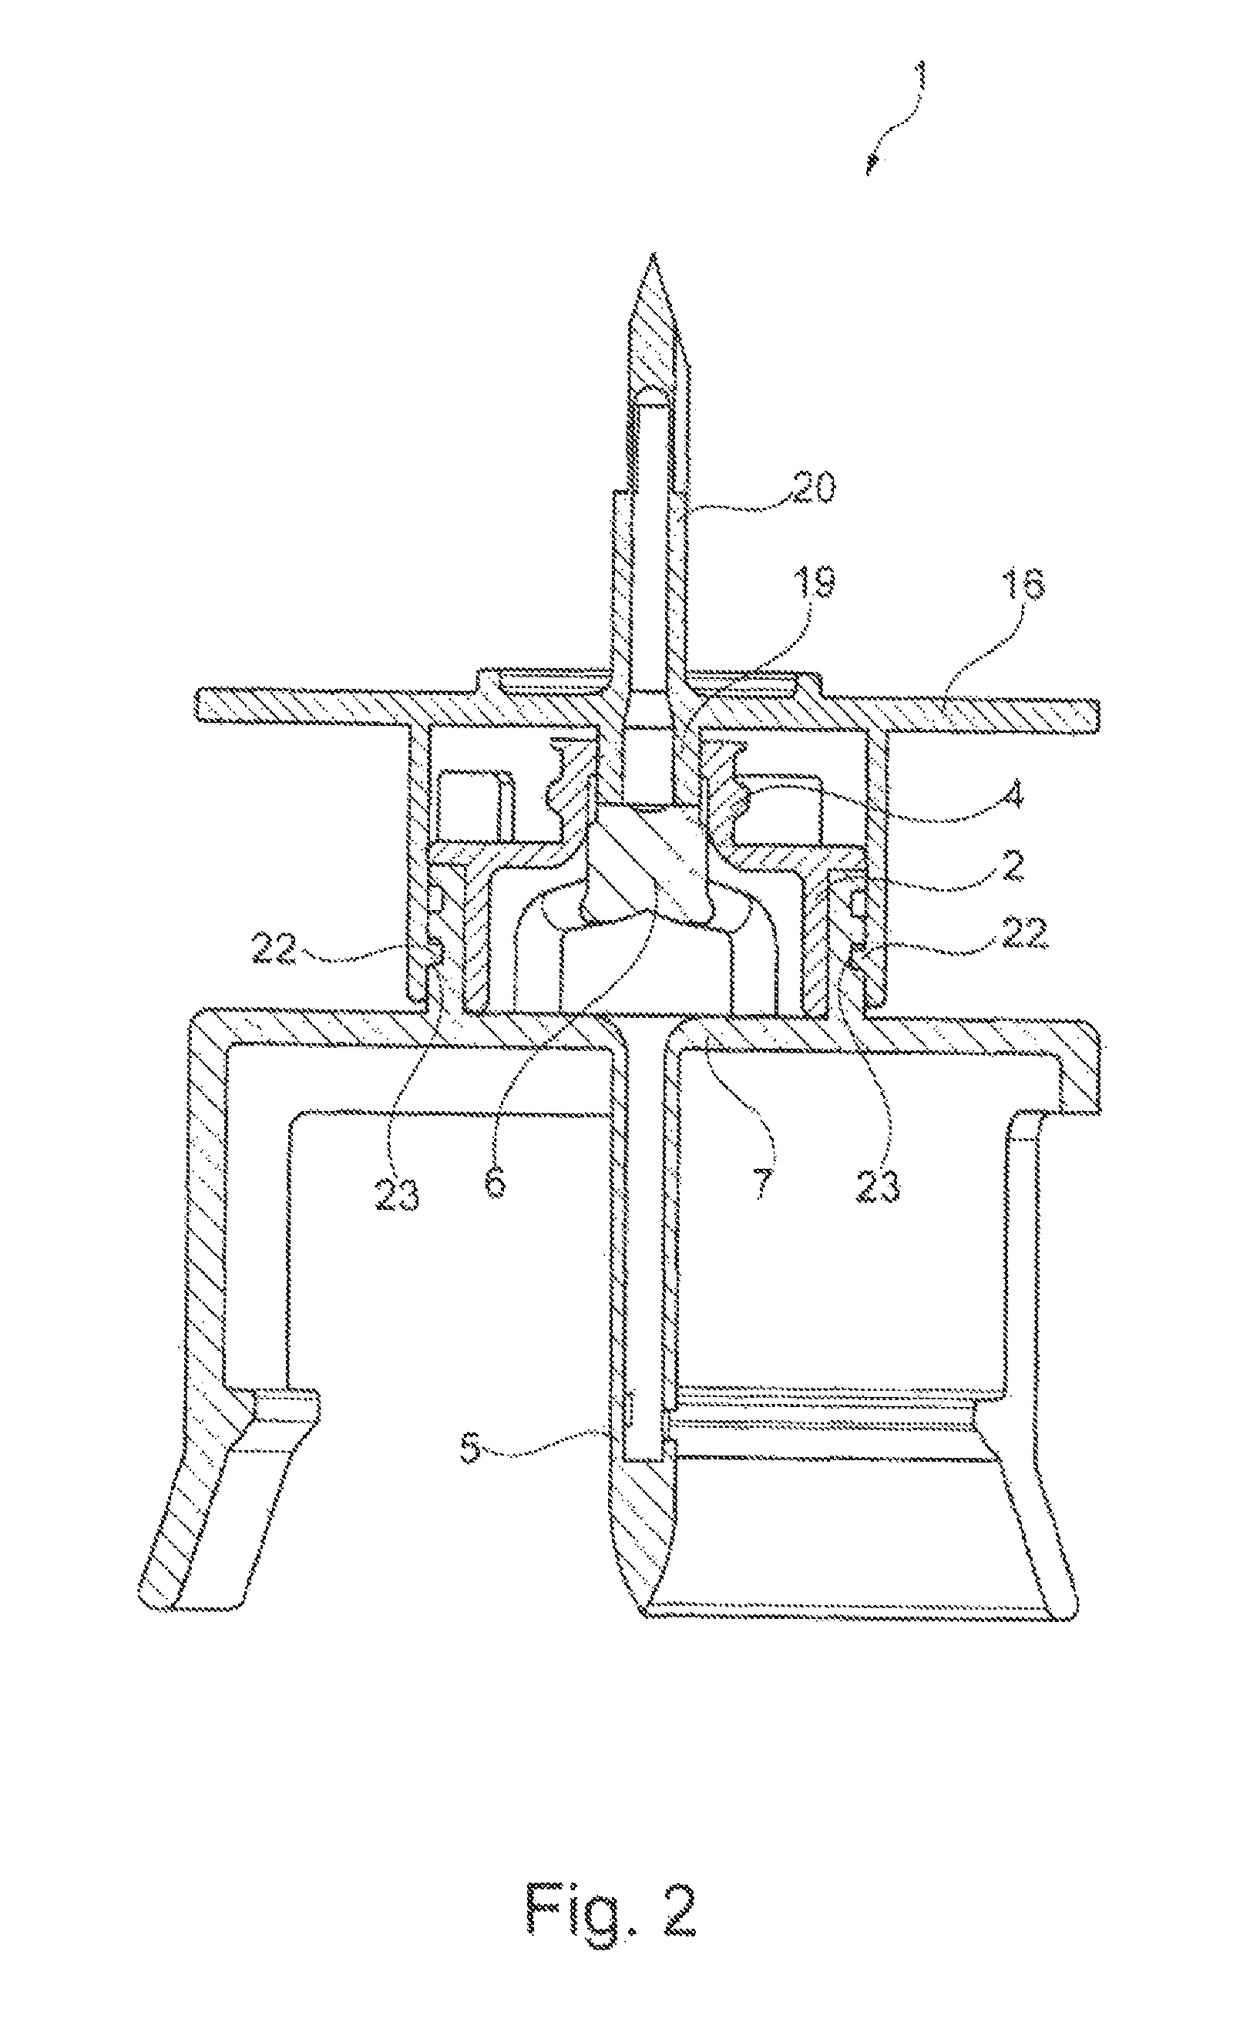 Fluid valve and fluid connection system